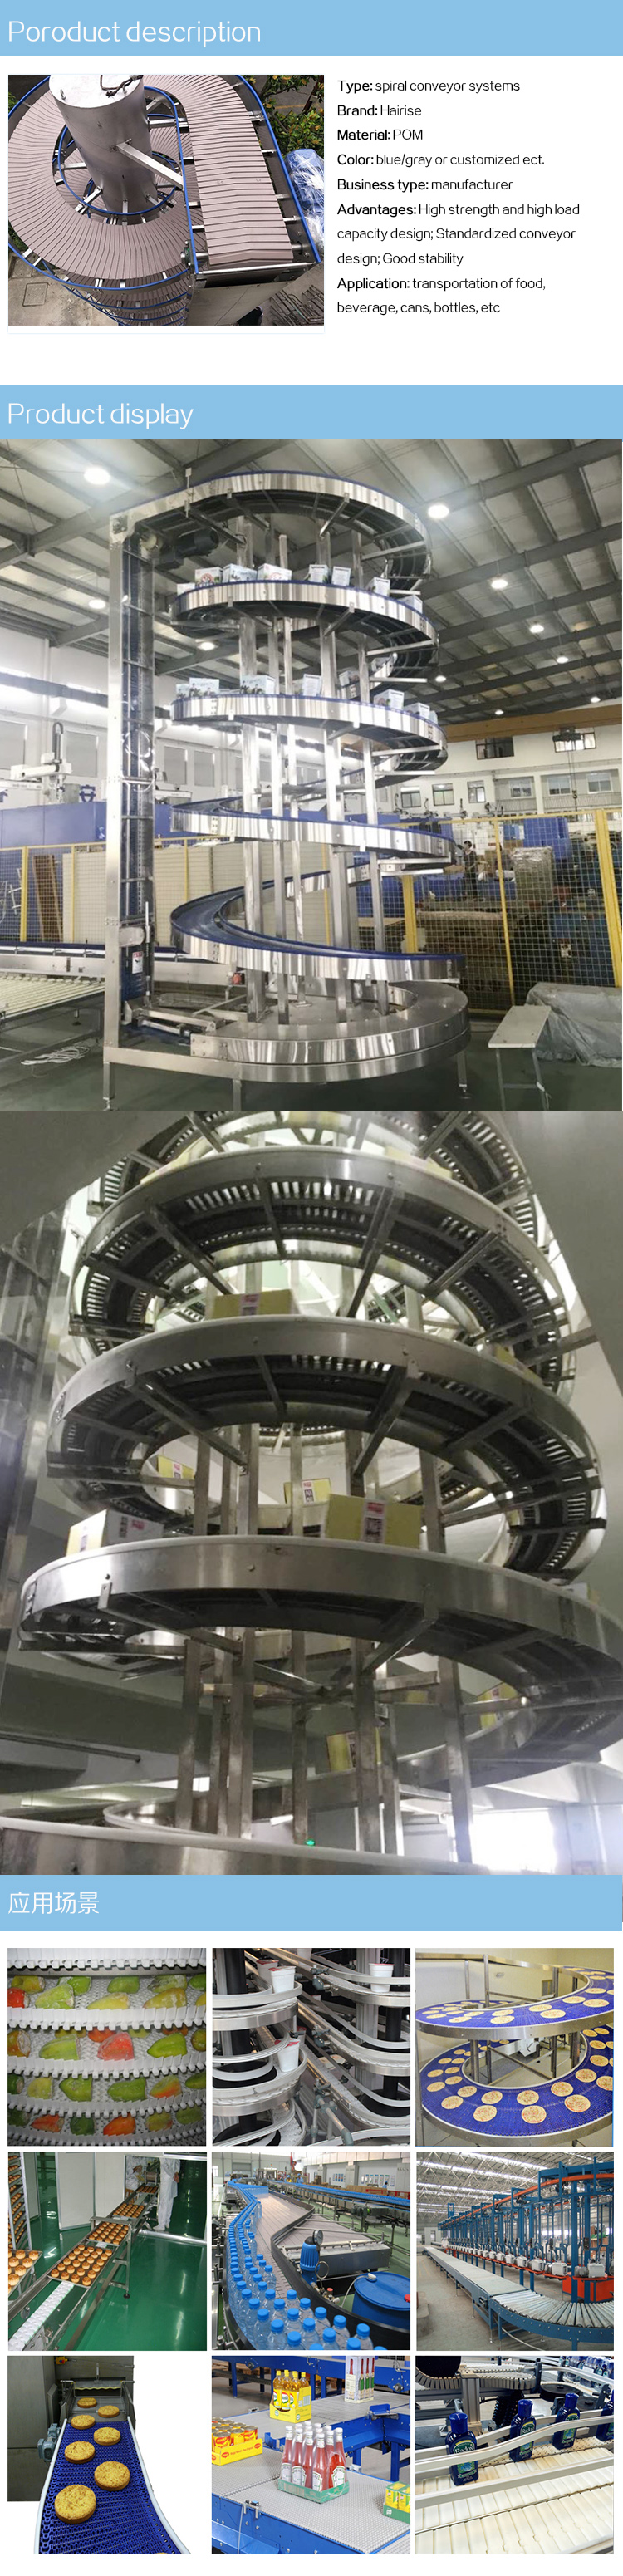 spiral conveyor systems-11.jpg